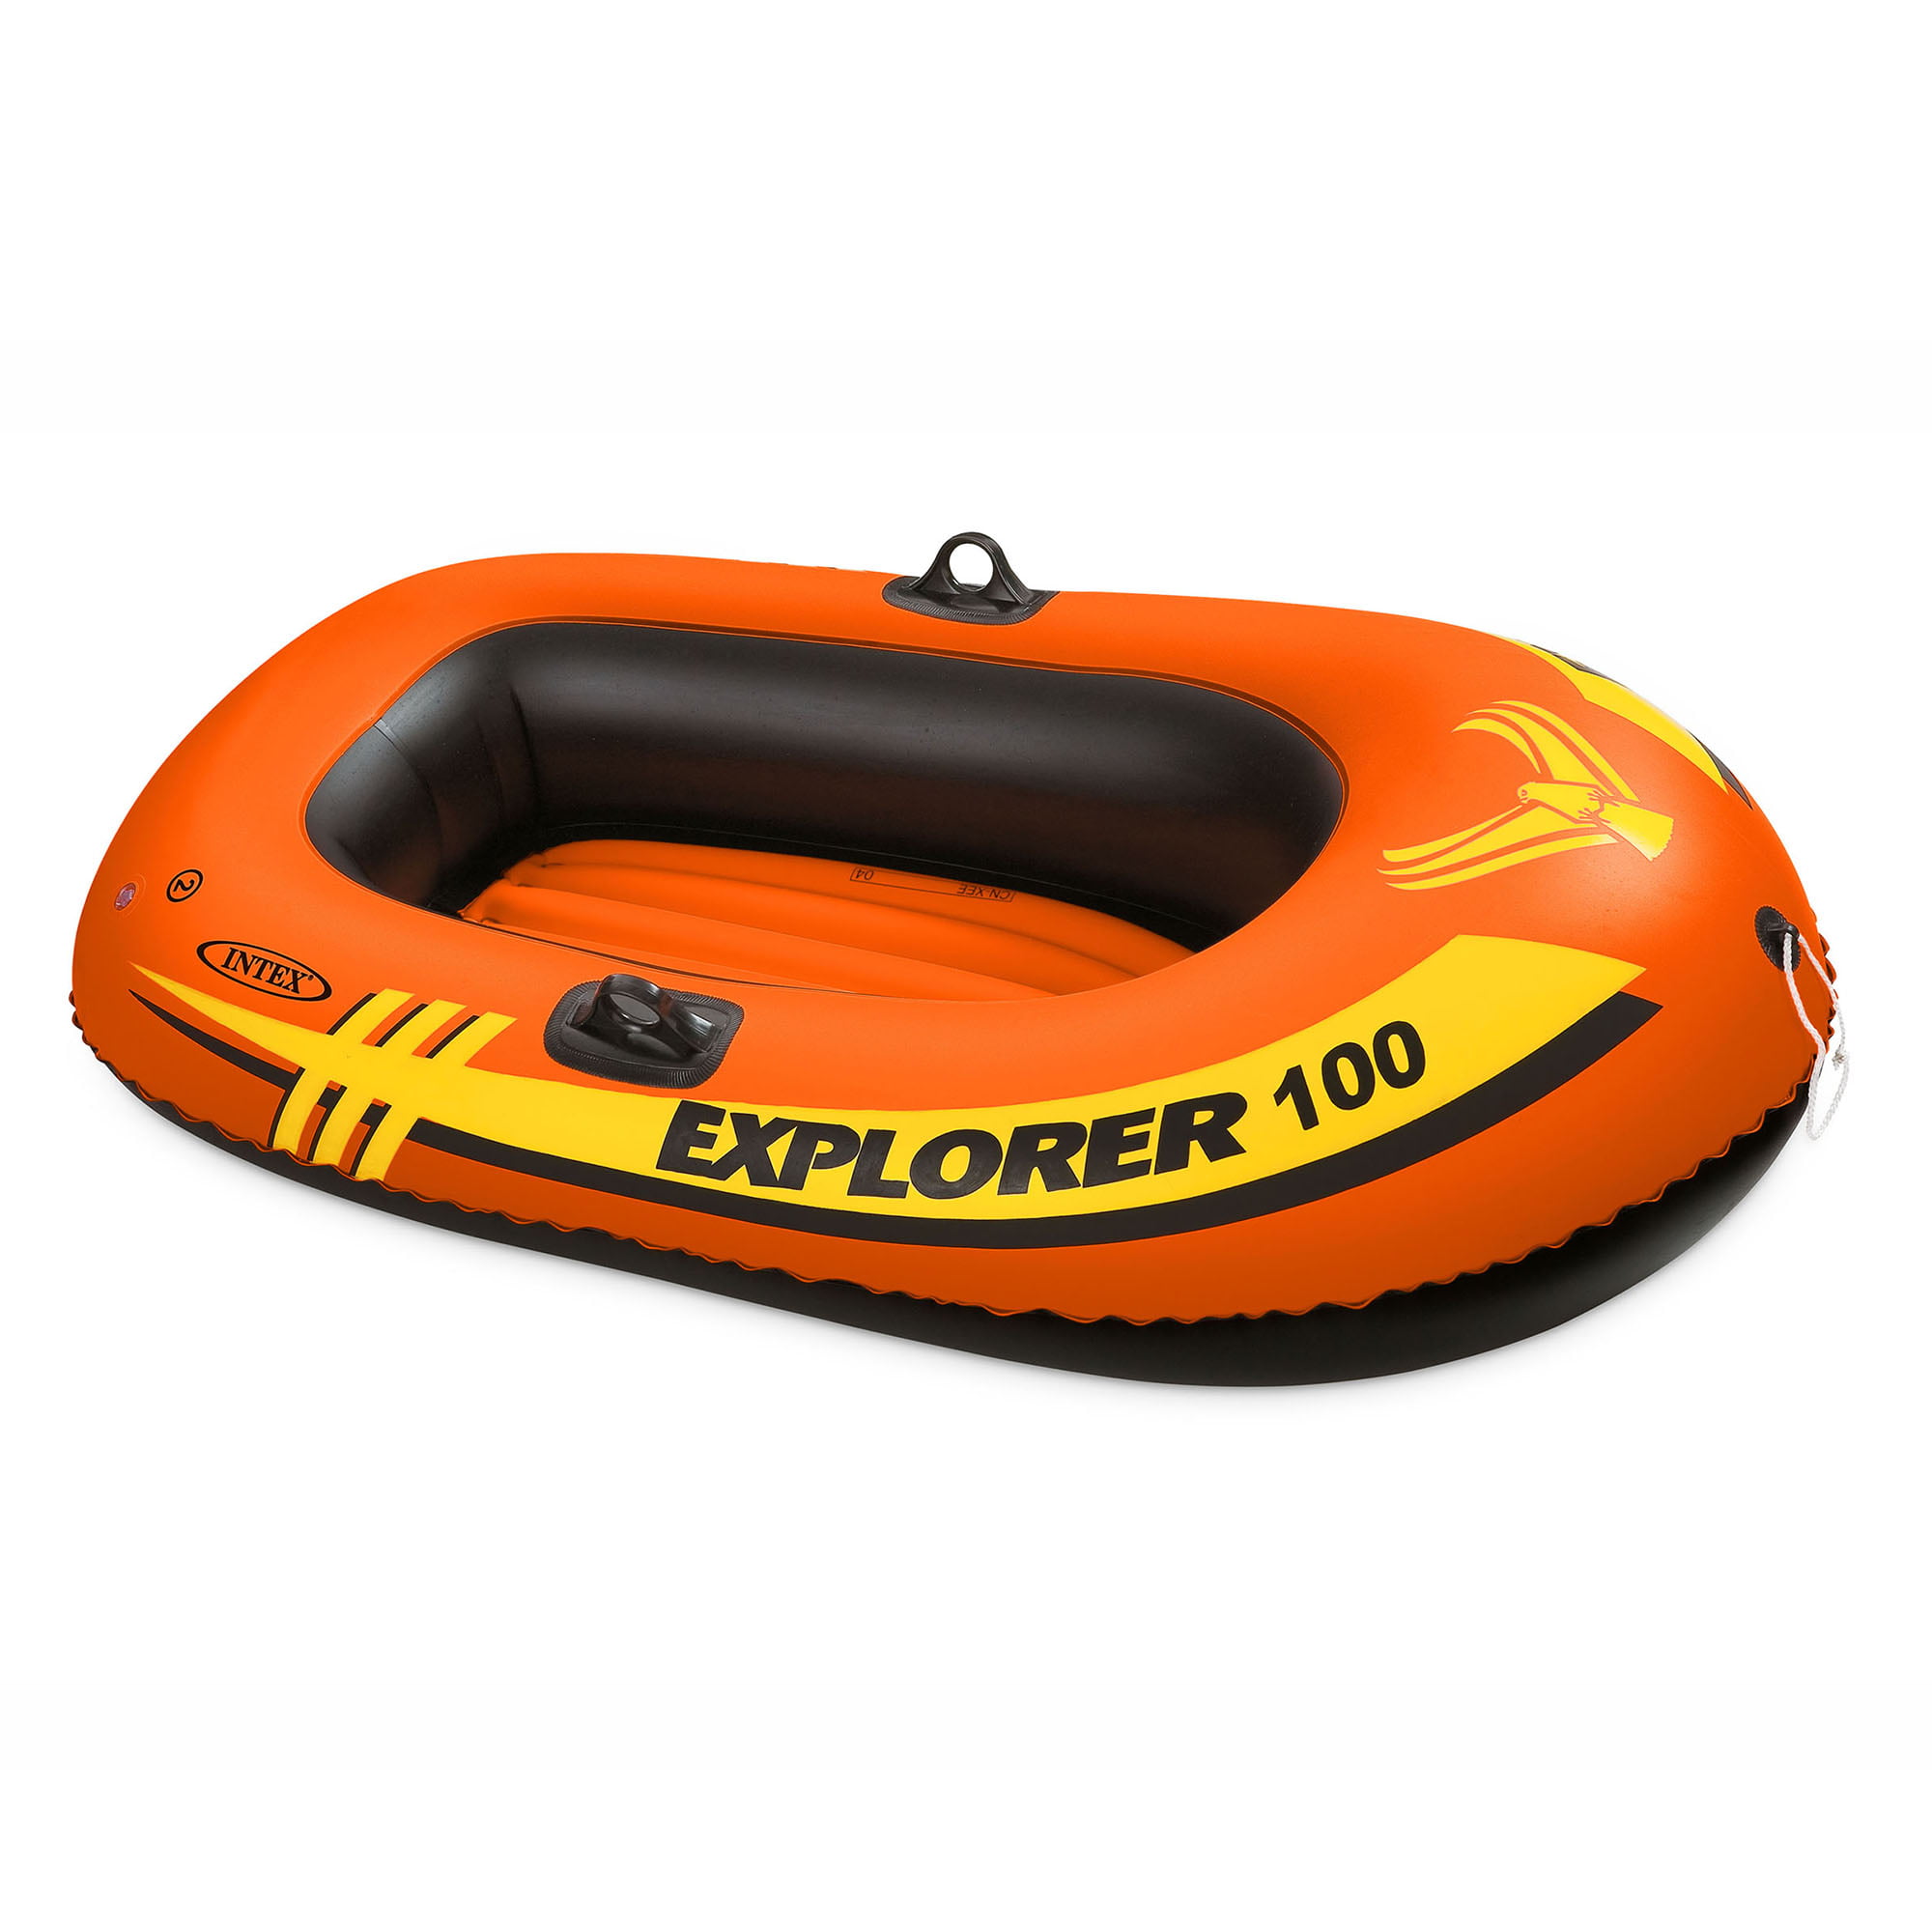 INTEX Explorer 200 Inflatable Boat Water Raft Lake River Pool 2 Person 73x37x16 